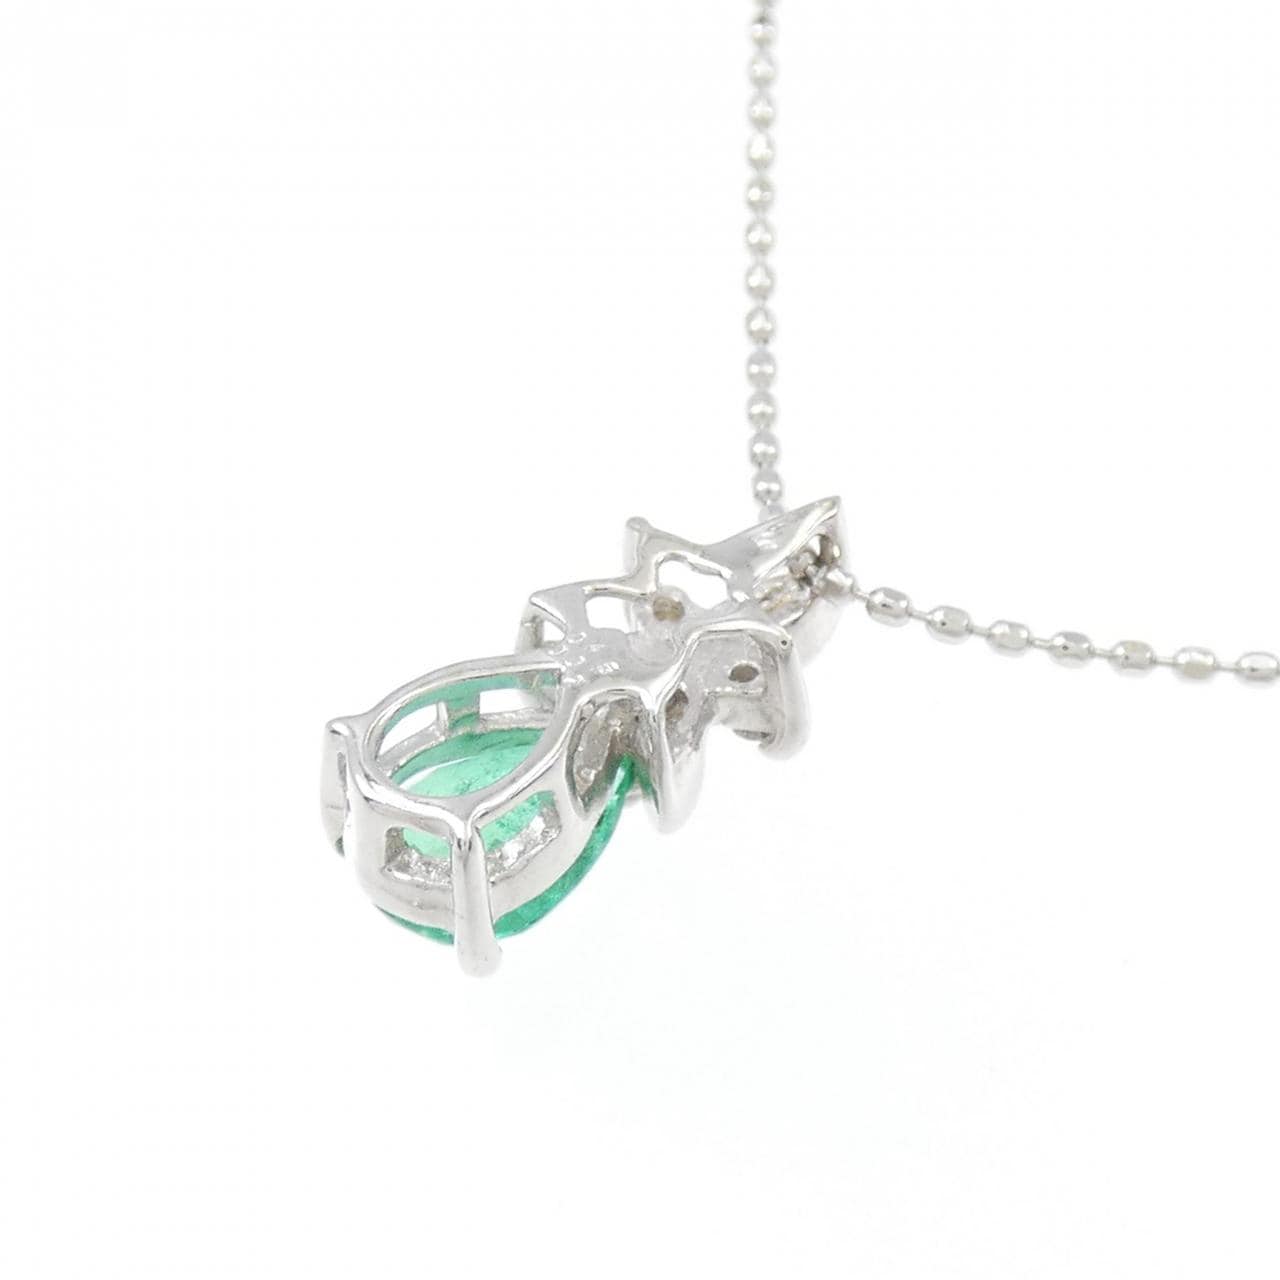 K18WG Emerald Necklace 0.45CT